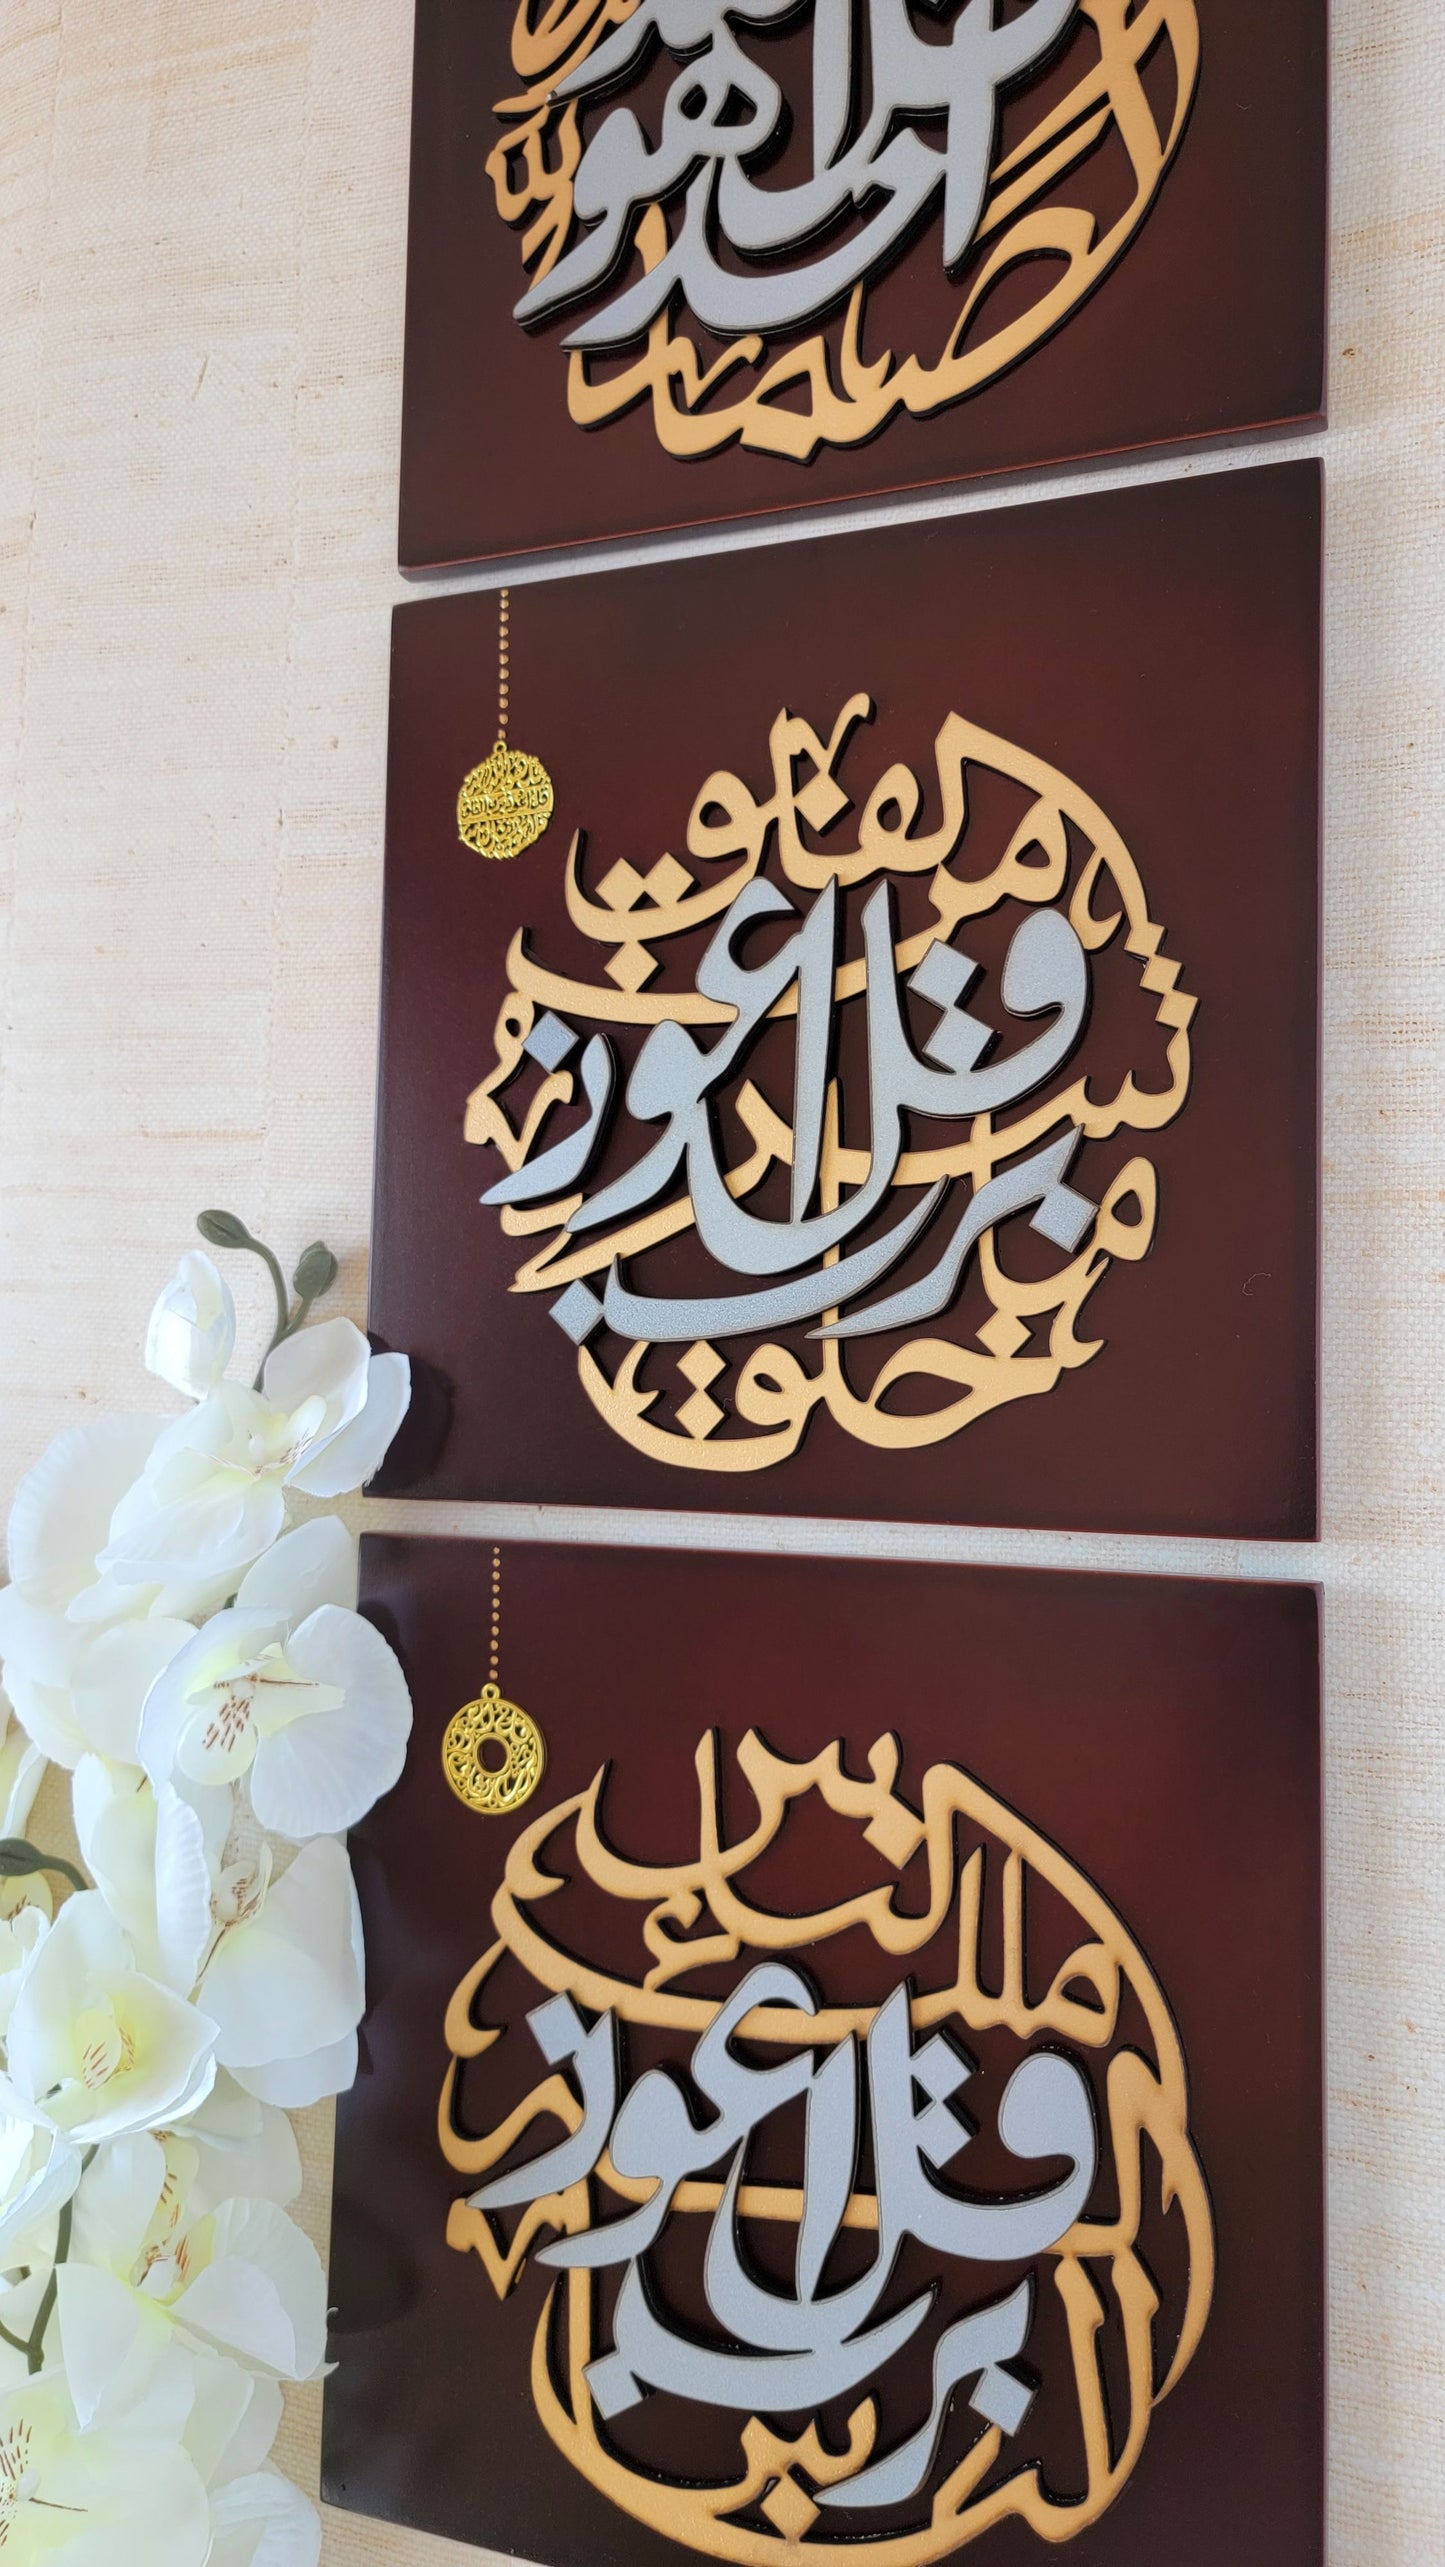 Set of 3 Quls Wooden Islamic Calligraphy Wall Art